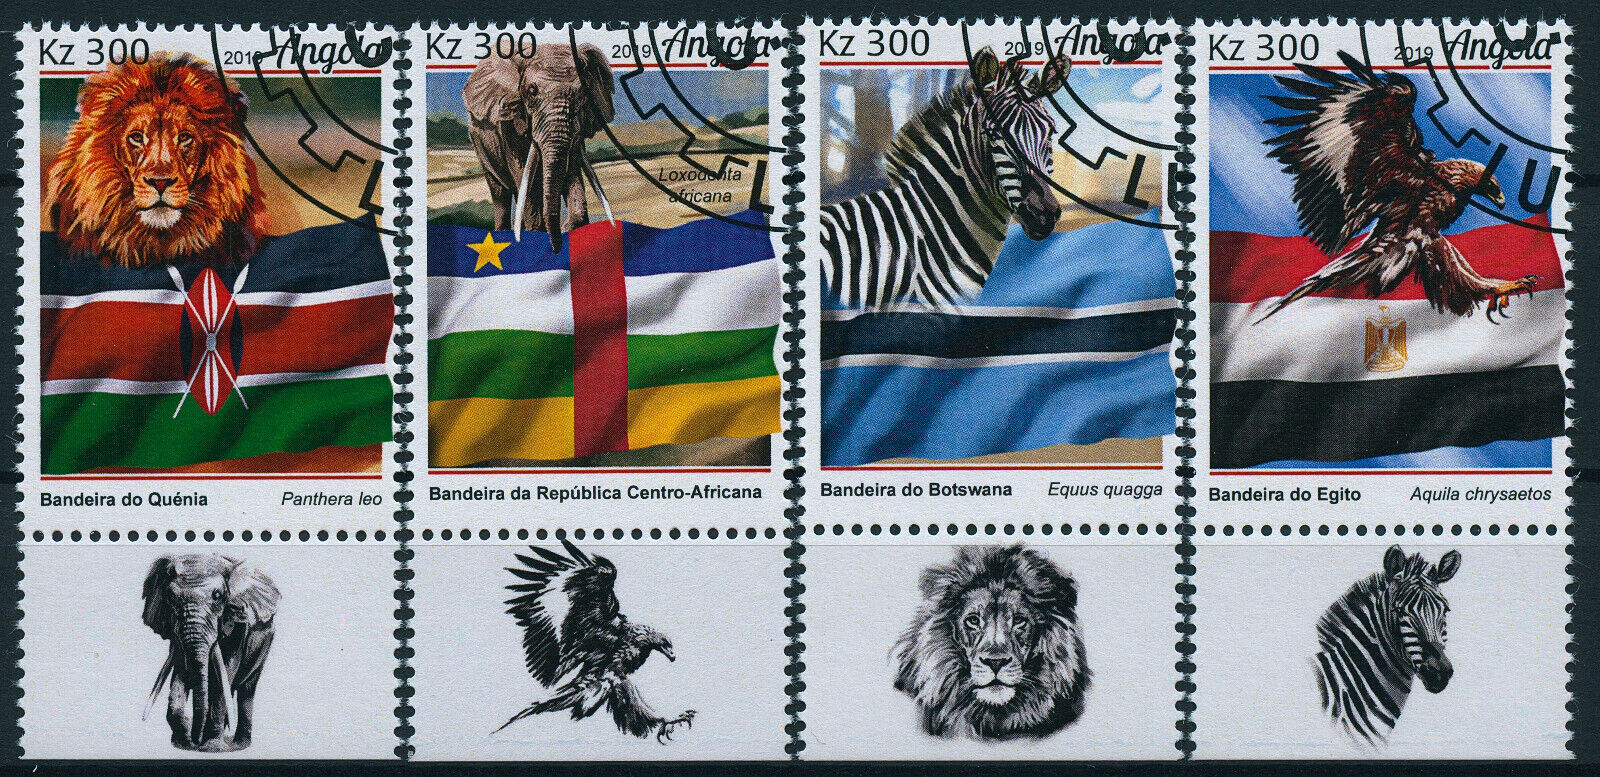 Angola 2019 CTO Wild Animals & African Flags Stamps Elephants Lions Zebra 4v Set